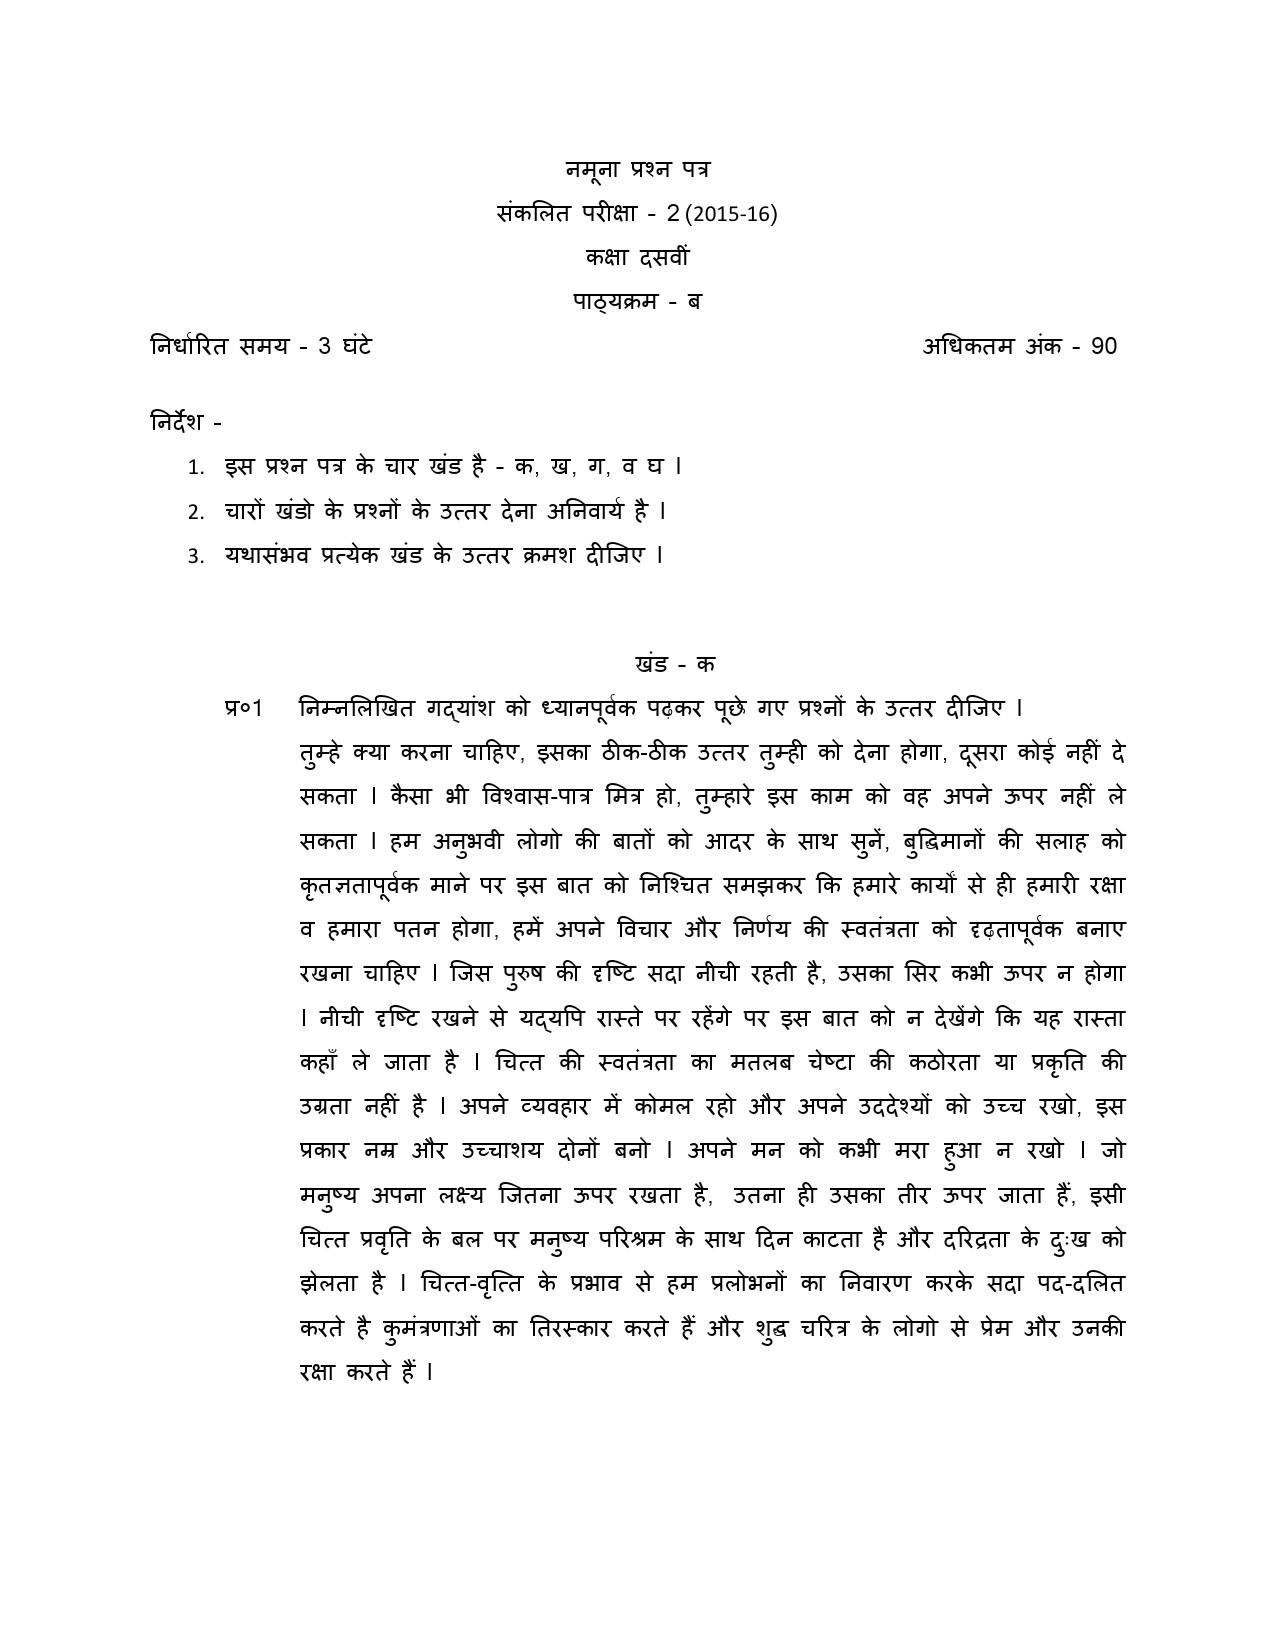 Hindi B CBSE Class X Sample Question Paper 2015 16 - Image 1